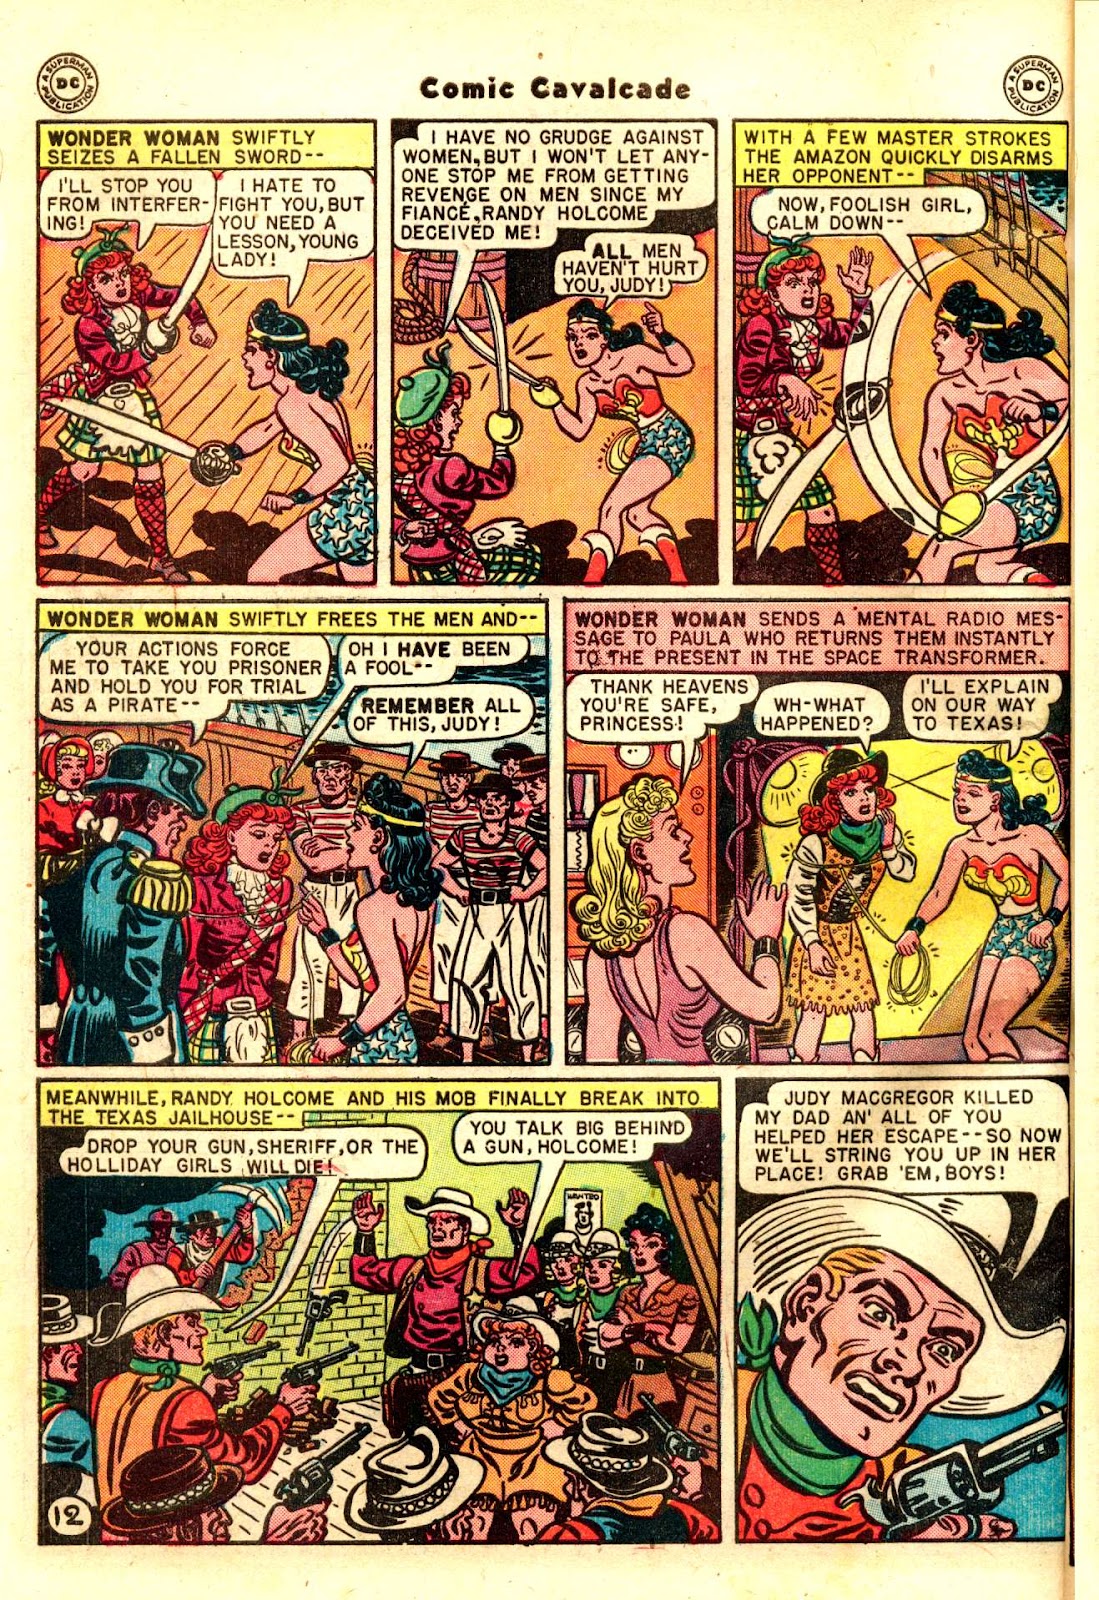 Comic Cavalcade issue 24 - Page 14